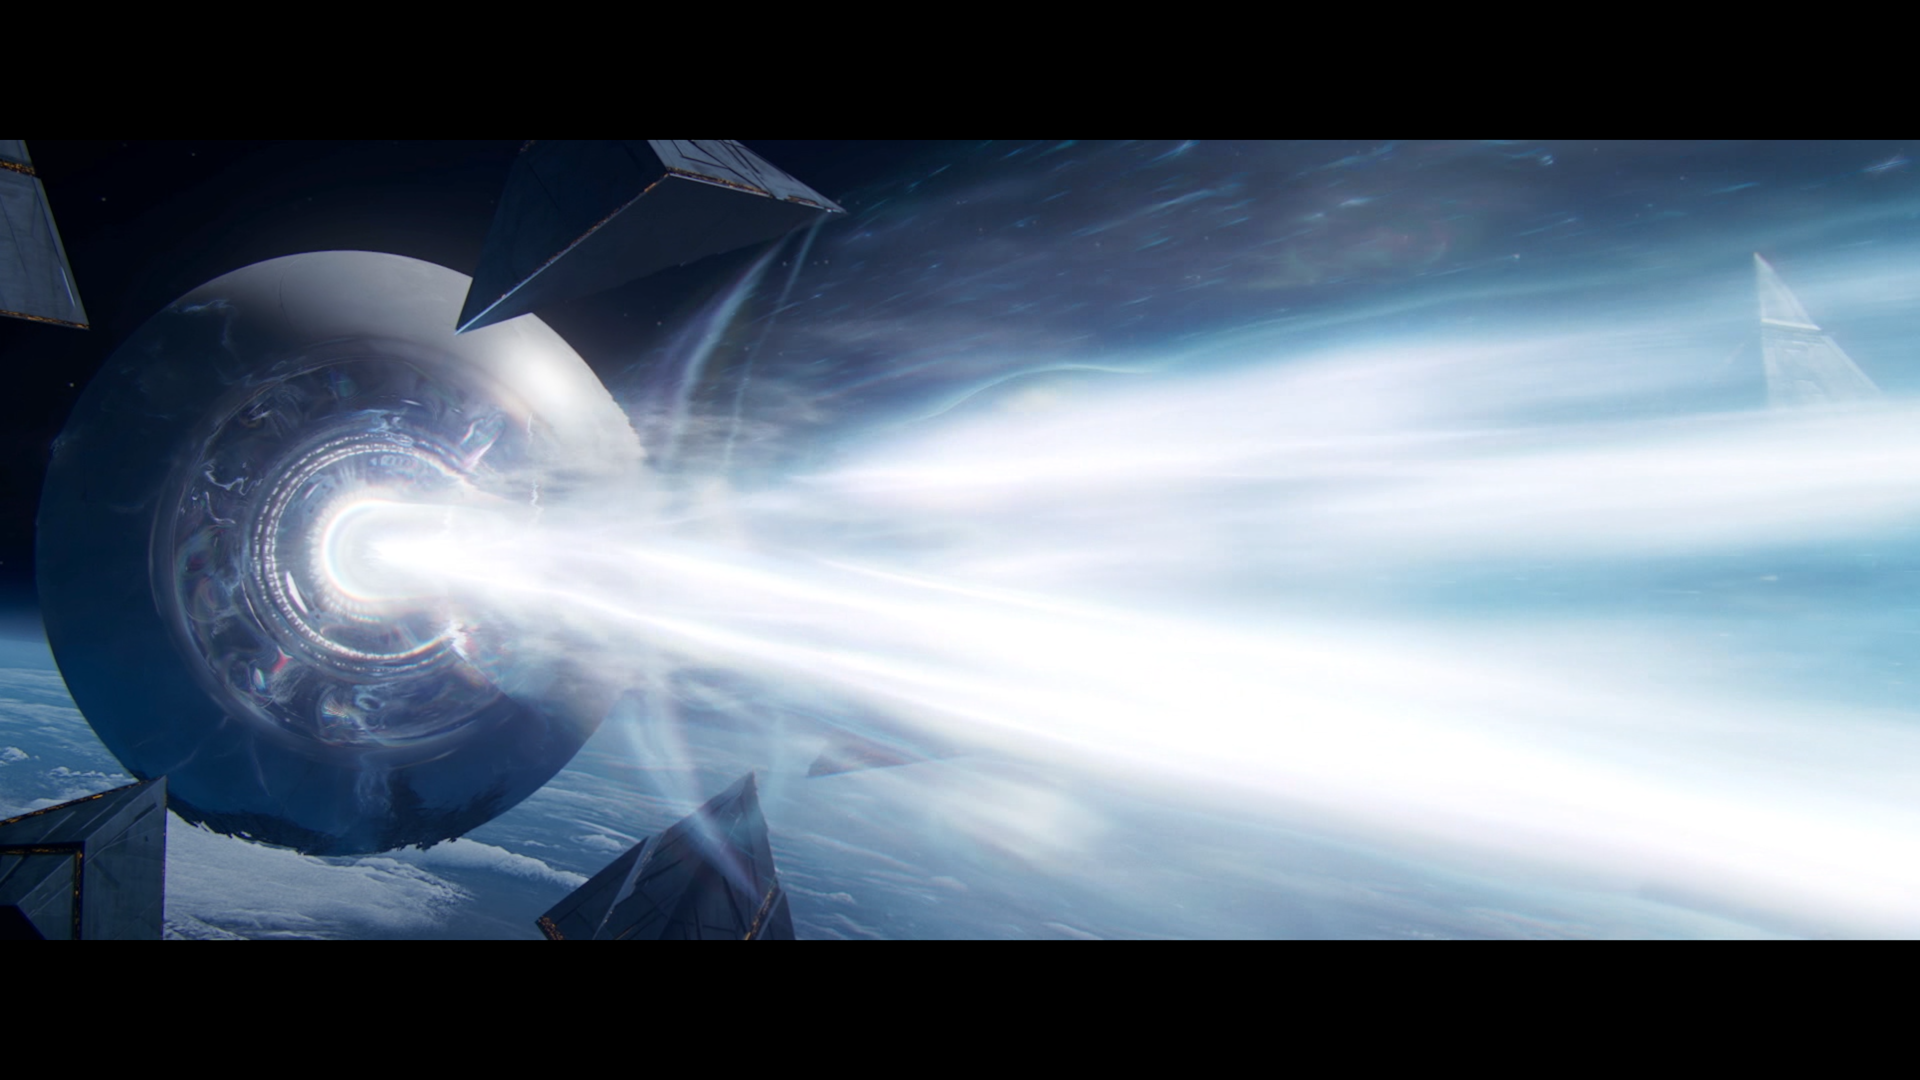 Destiny 2 Lightfall - a cutscene with the Traveler firing a beam like the Death Star